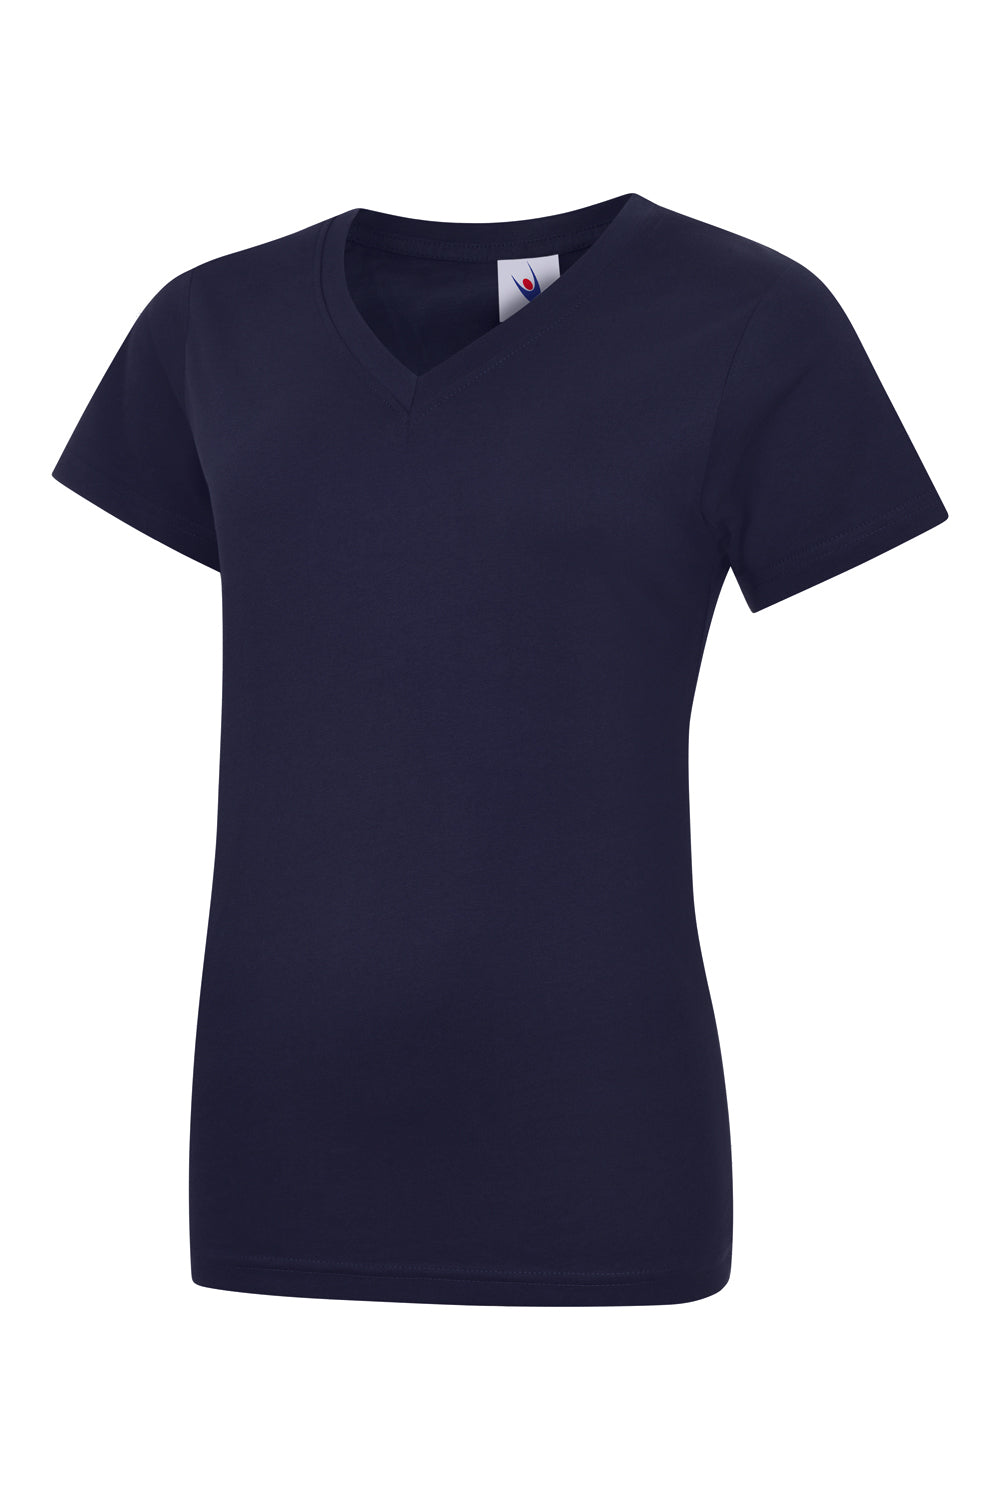 Uneek Ladies Classic V Neck T Shirt UC319 - Navy